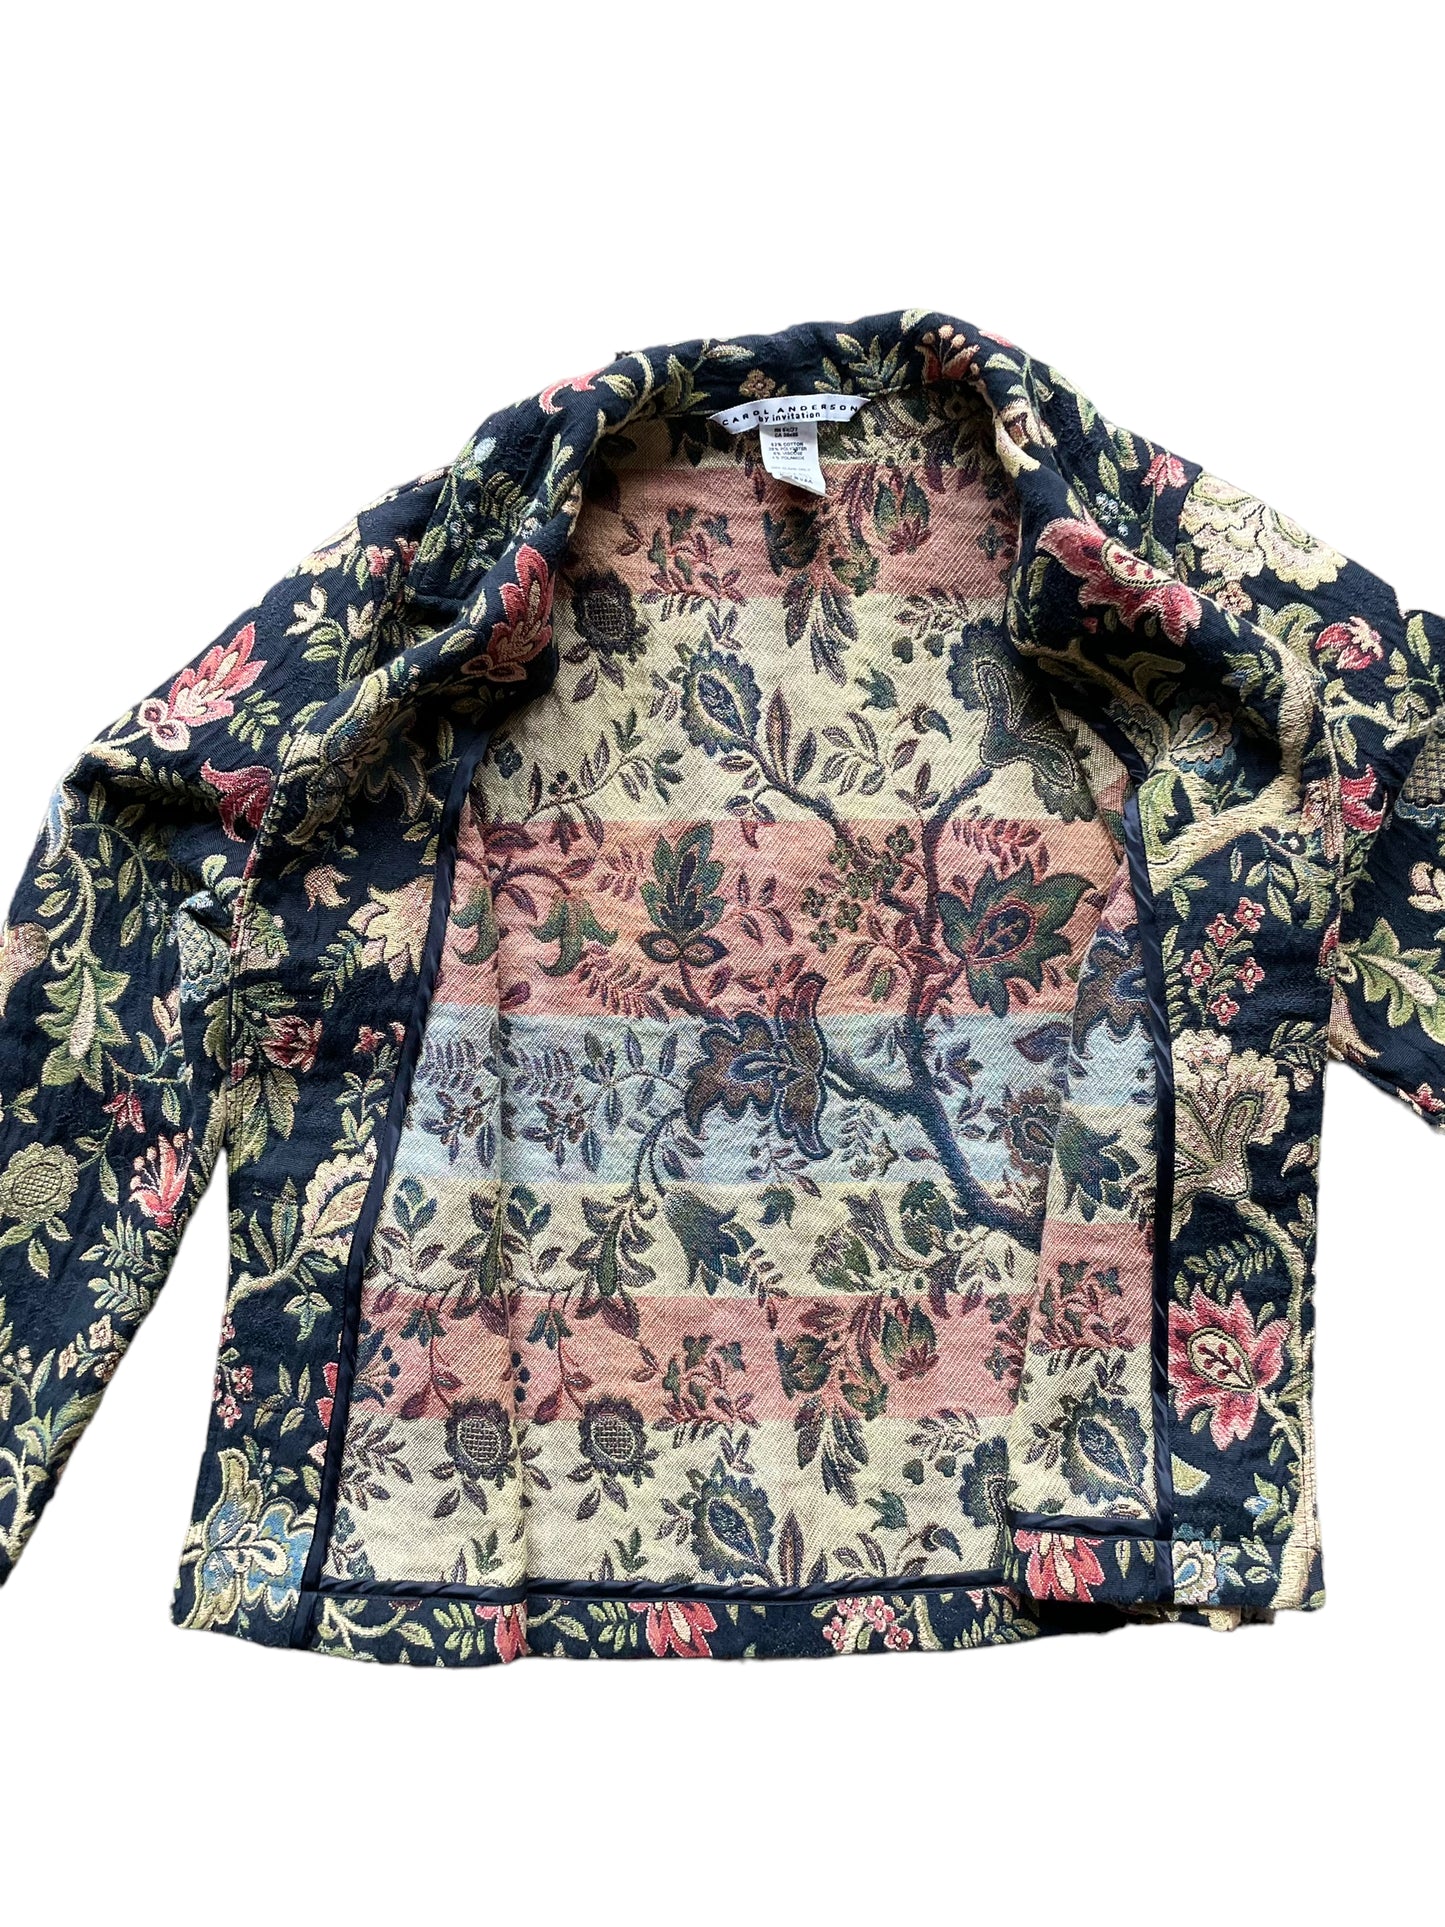 Front open view of Vintage 90s Ladies Tapestry Jacket | Seattle True Vintage | Barn Owl Ladies Clothing